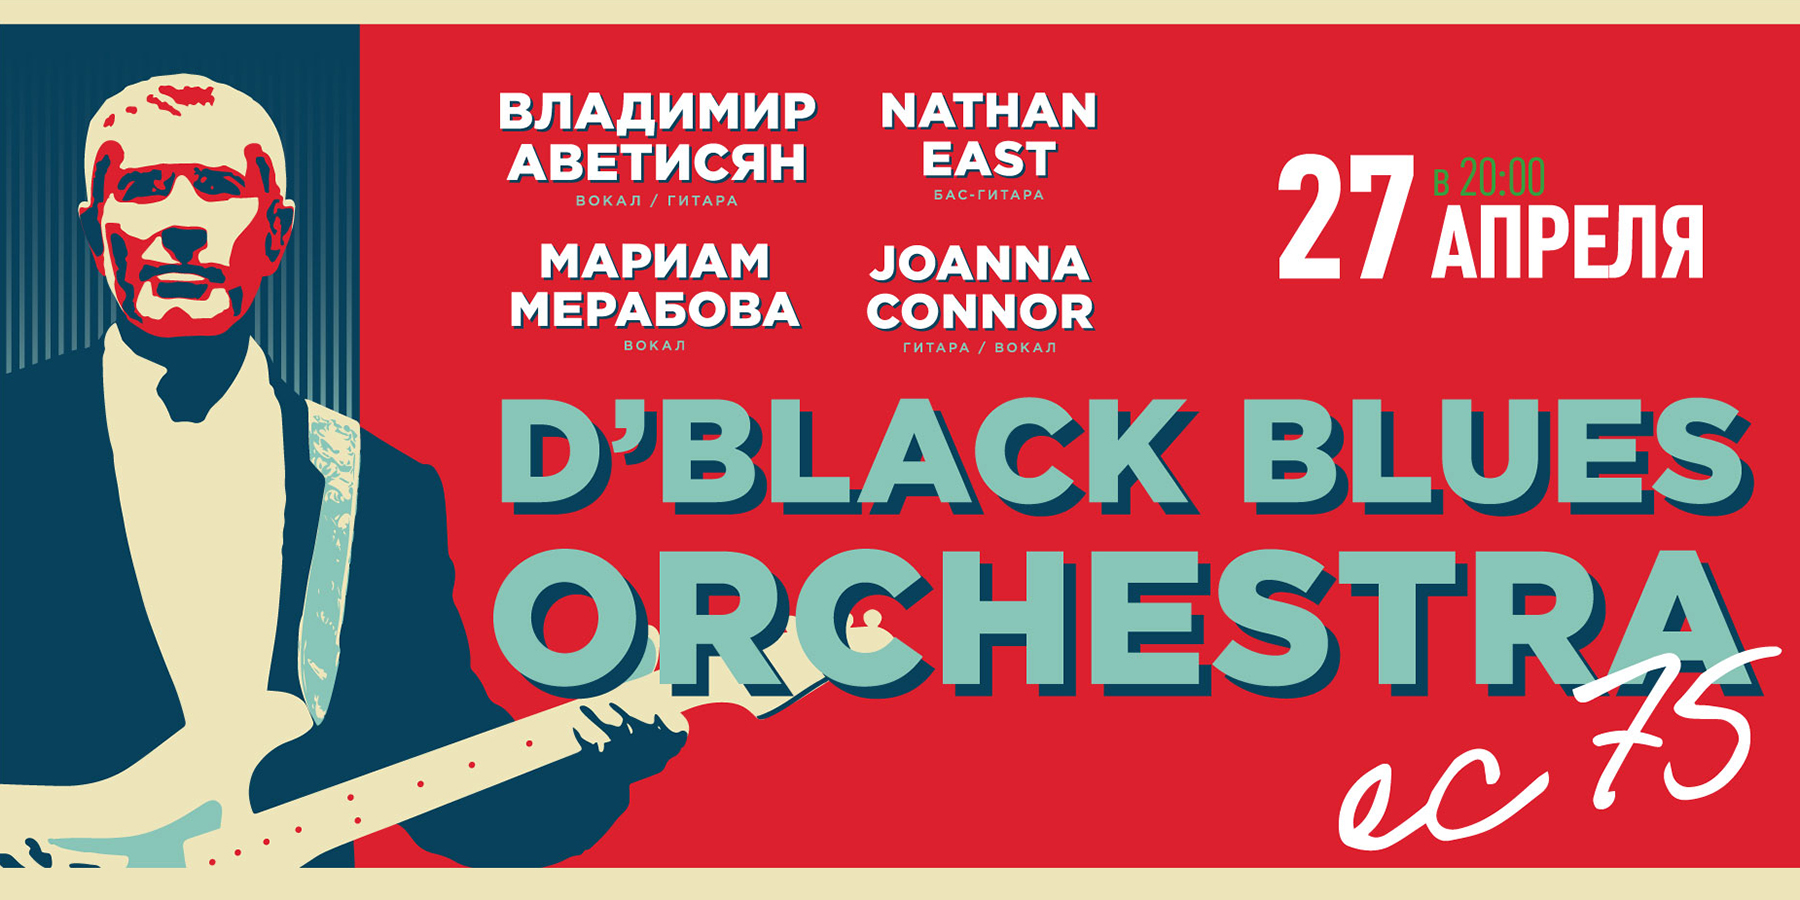 Владимир Аветисян и D’Black Blues Orchestra